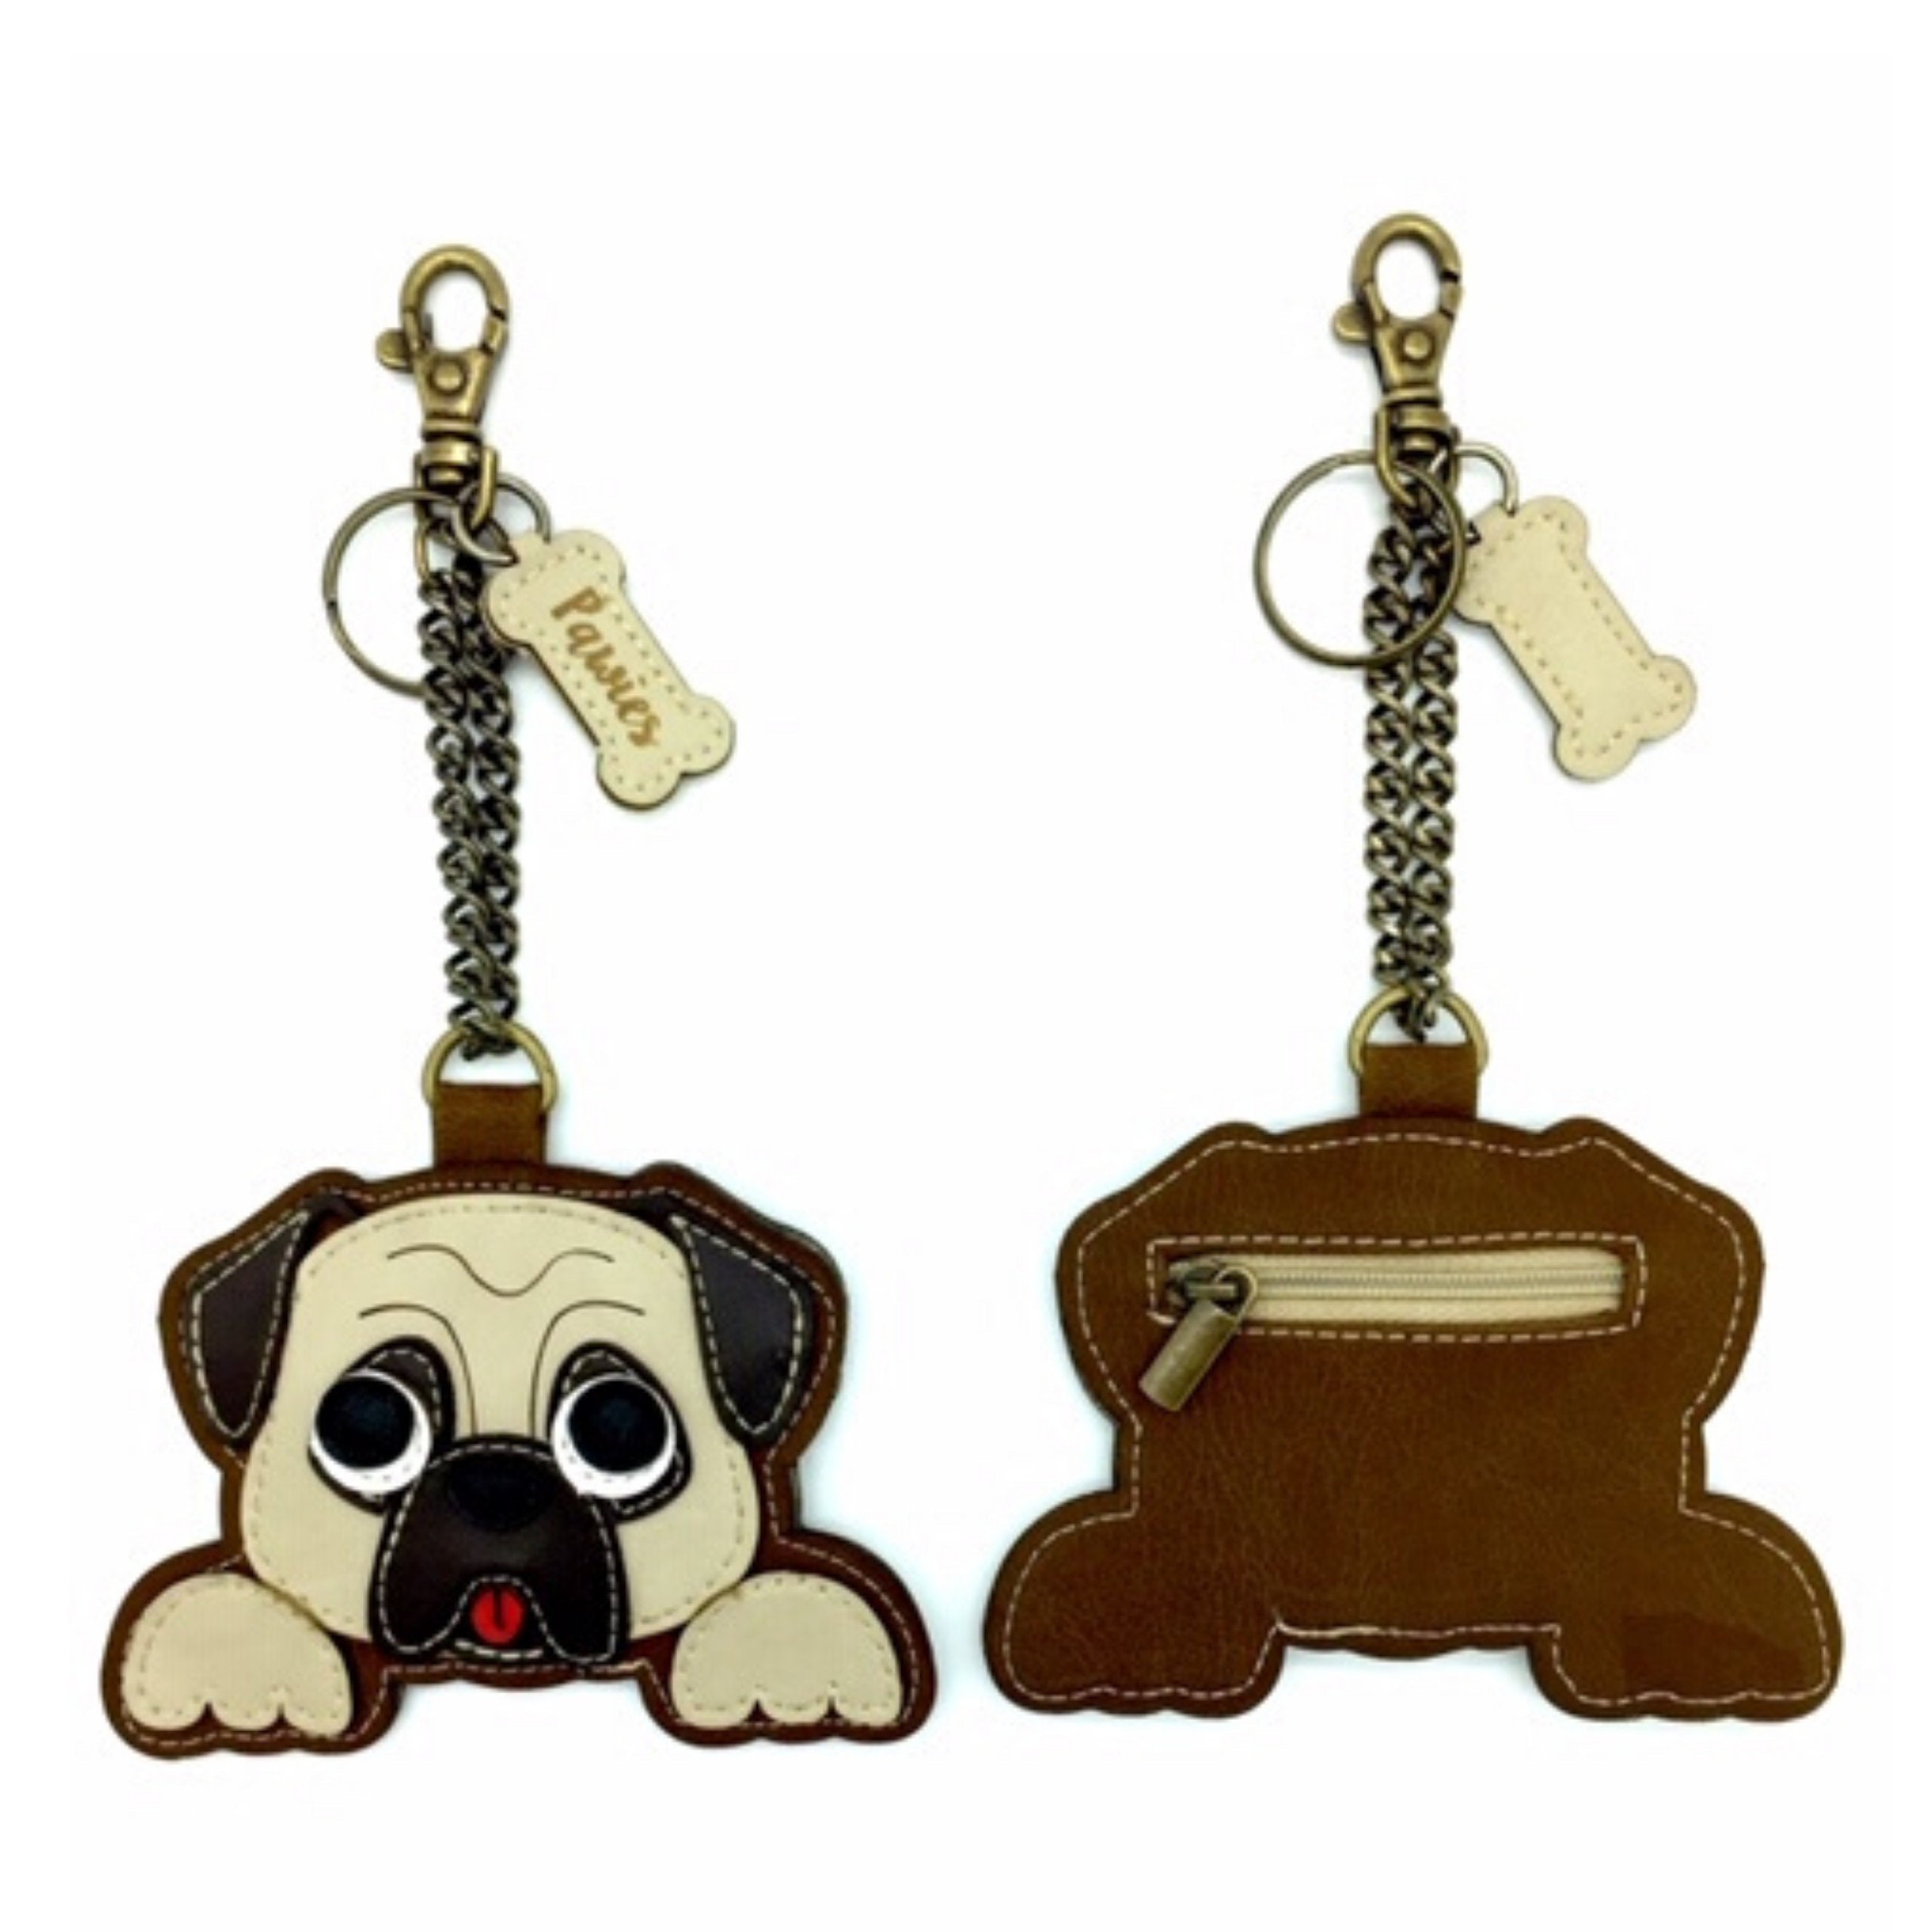 RICKI'S Vegan Leather Dog Keychain